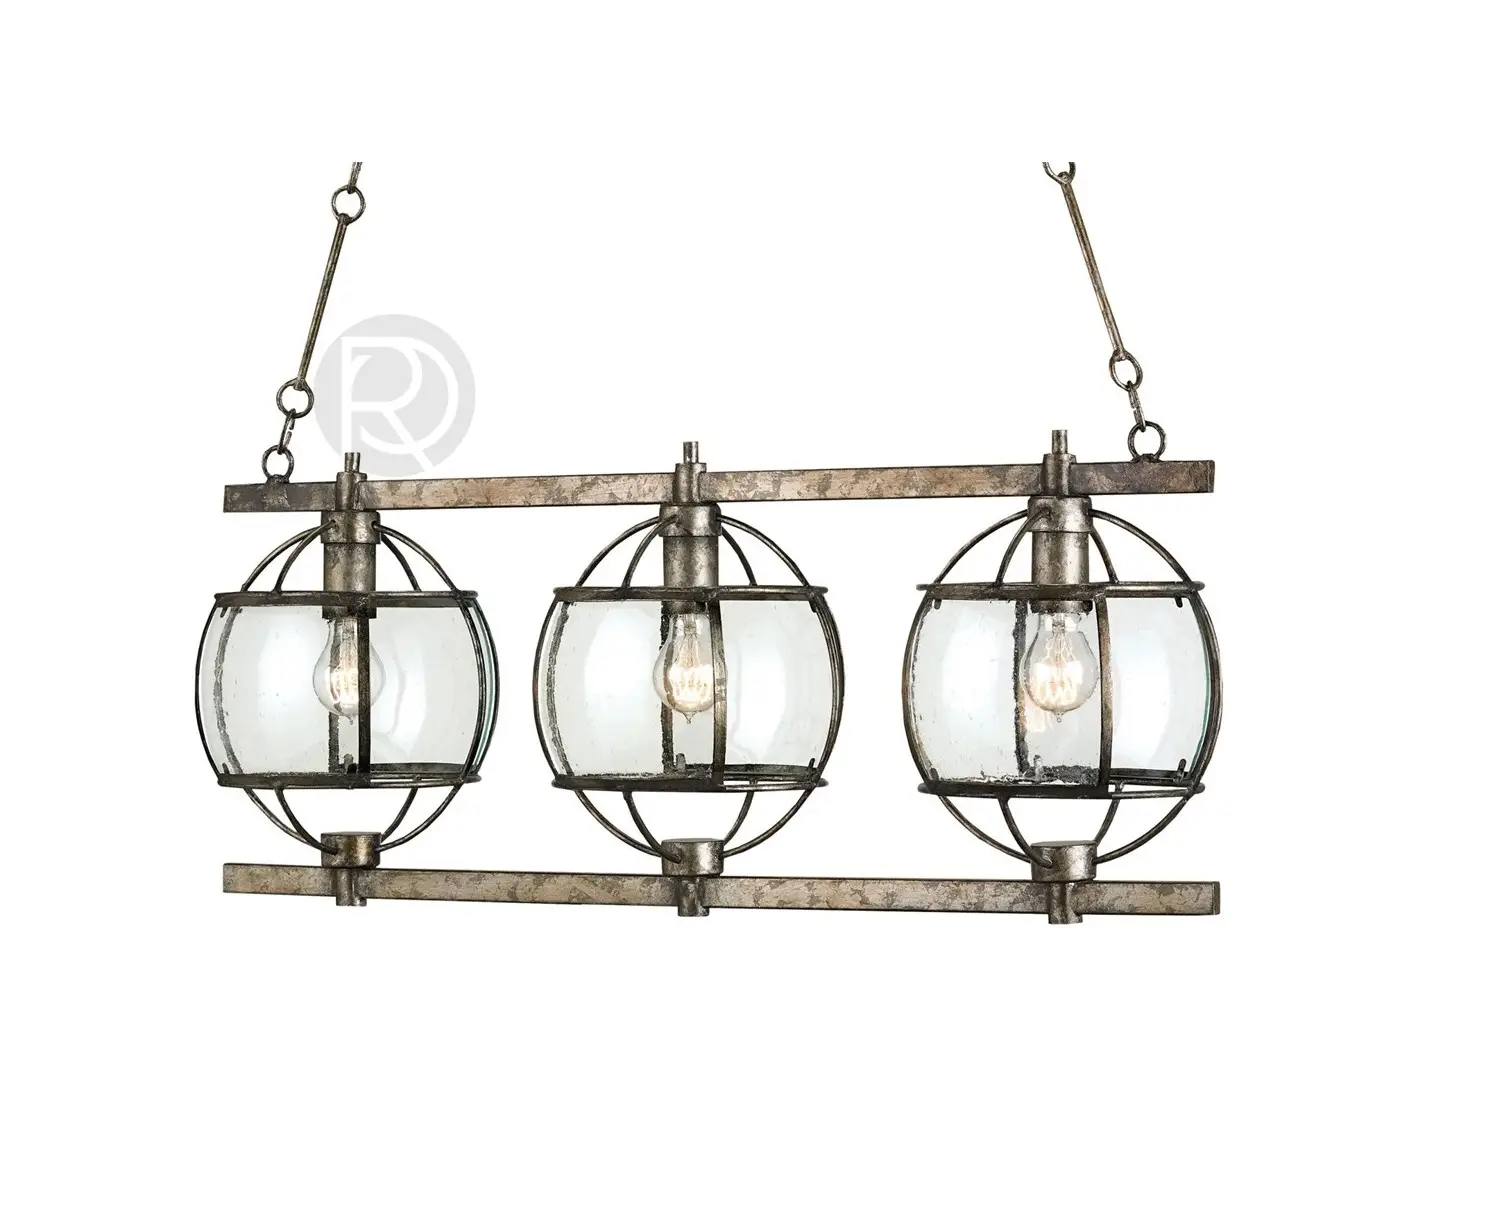 BROXTON RECTANGULAR chandelier by Currey & Company